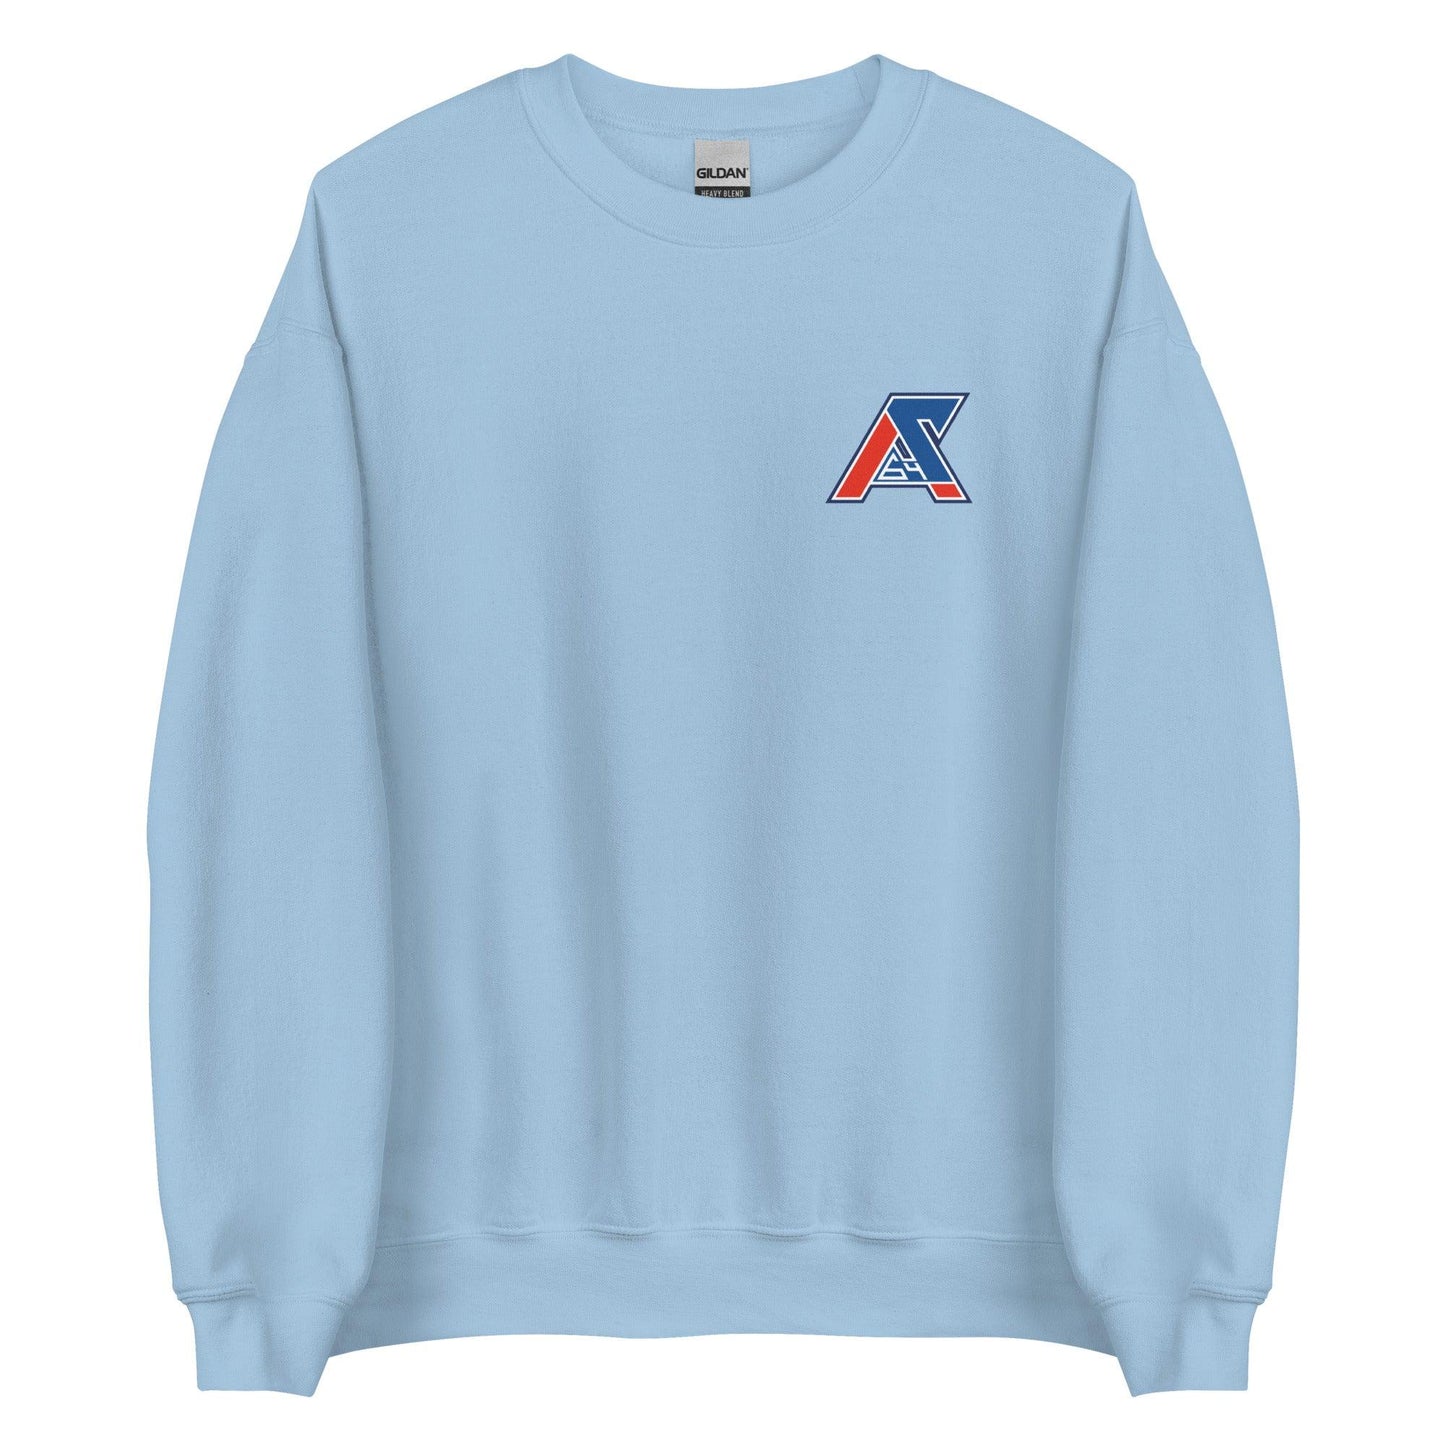 Shaun Anderson “SA” Sweatshirt - Fan Arch